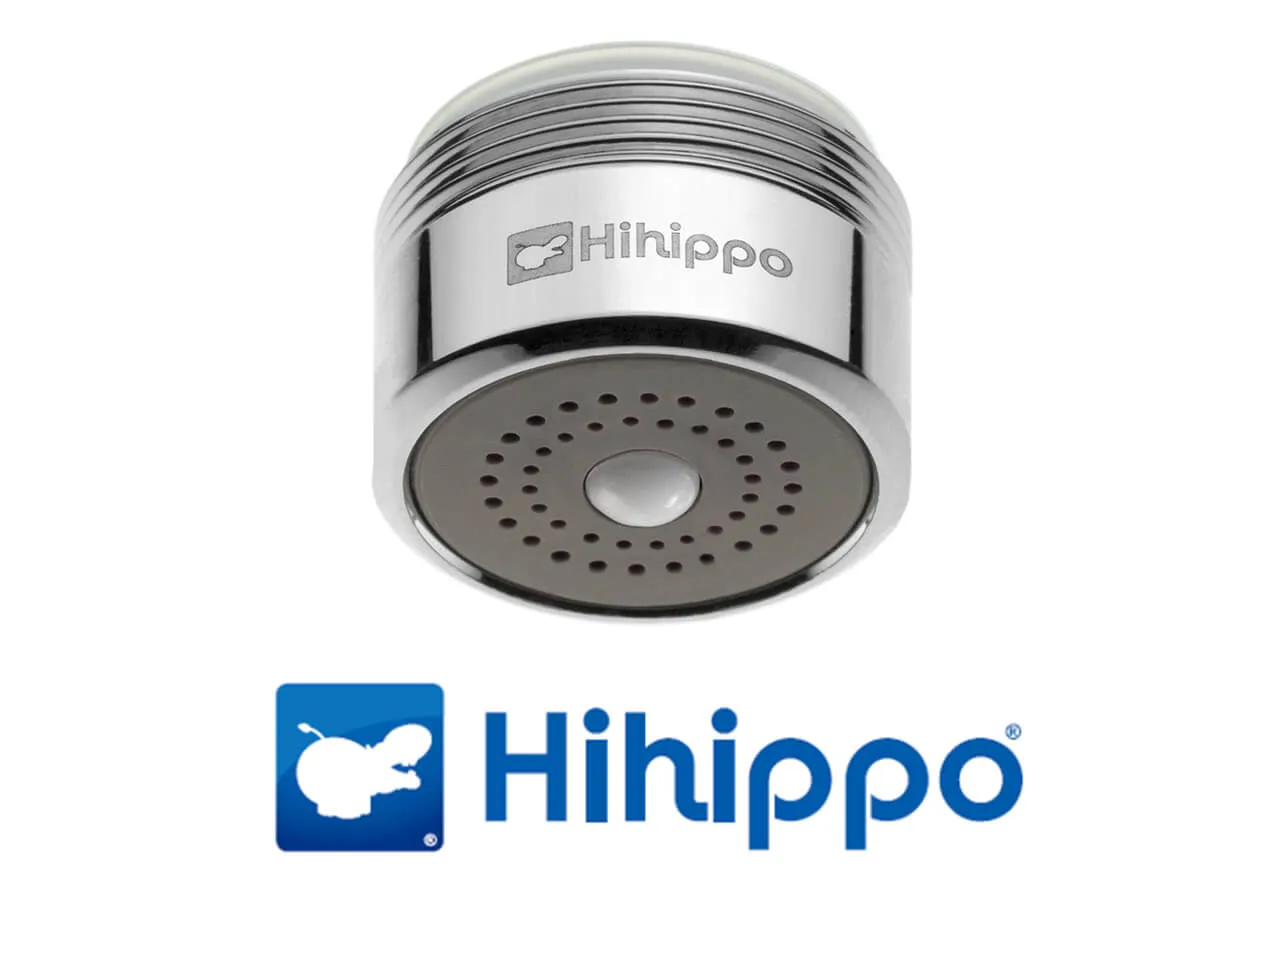 Strahlregler Hihippo T 3.8 - 8.0 l/min